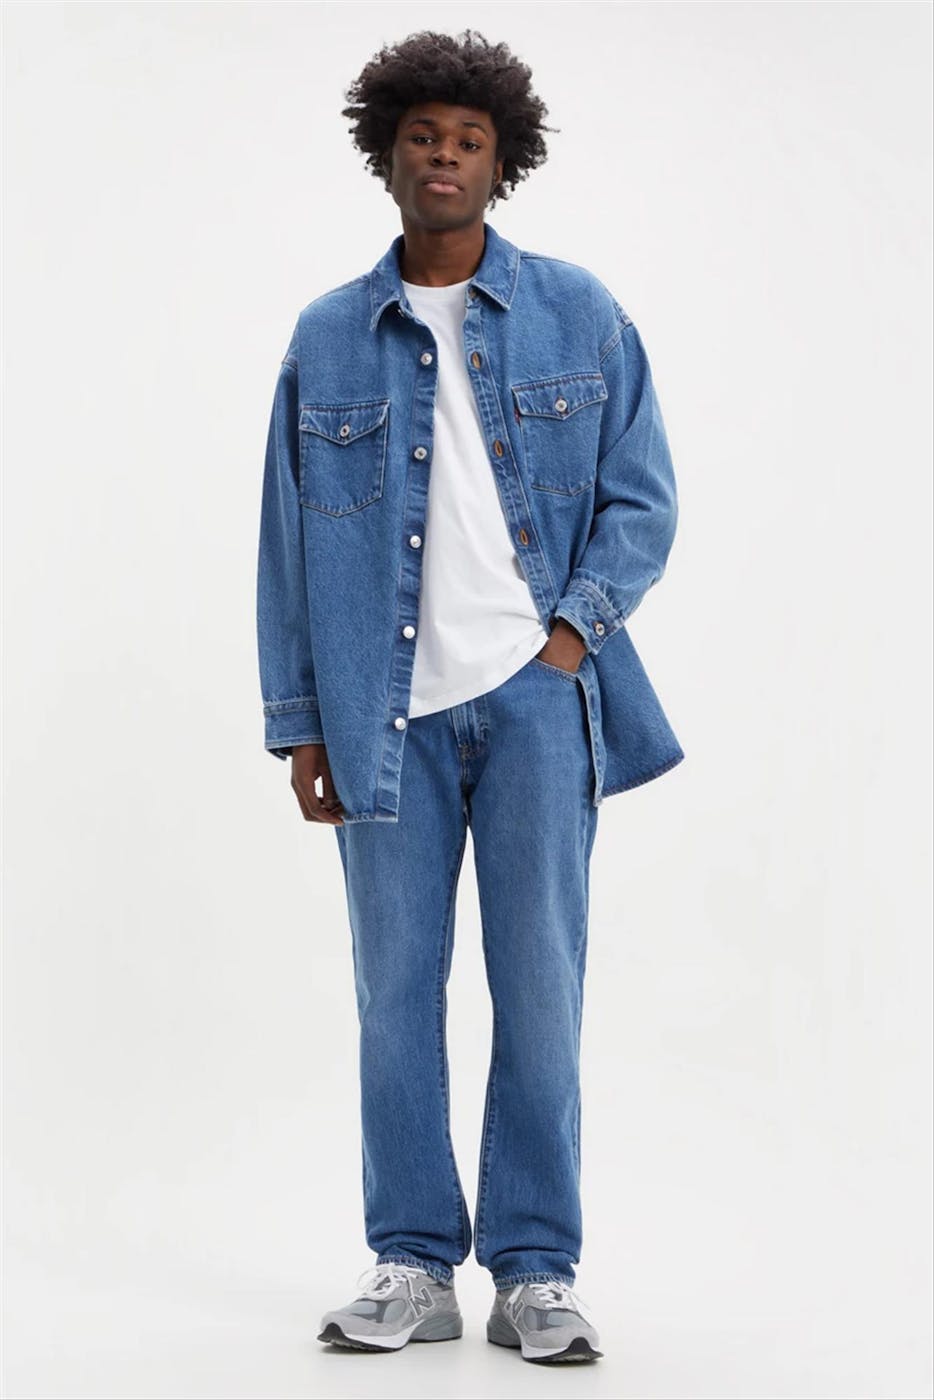 Levi's - Blauwe 551 straight jeans